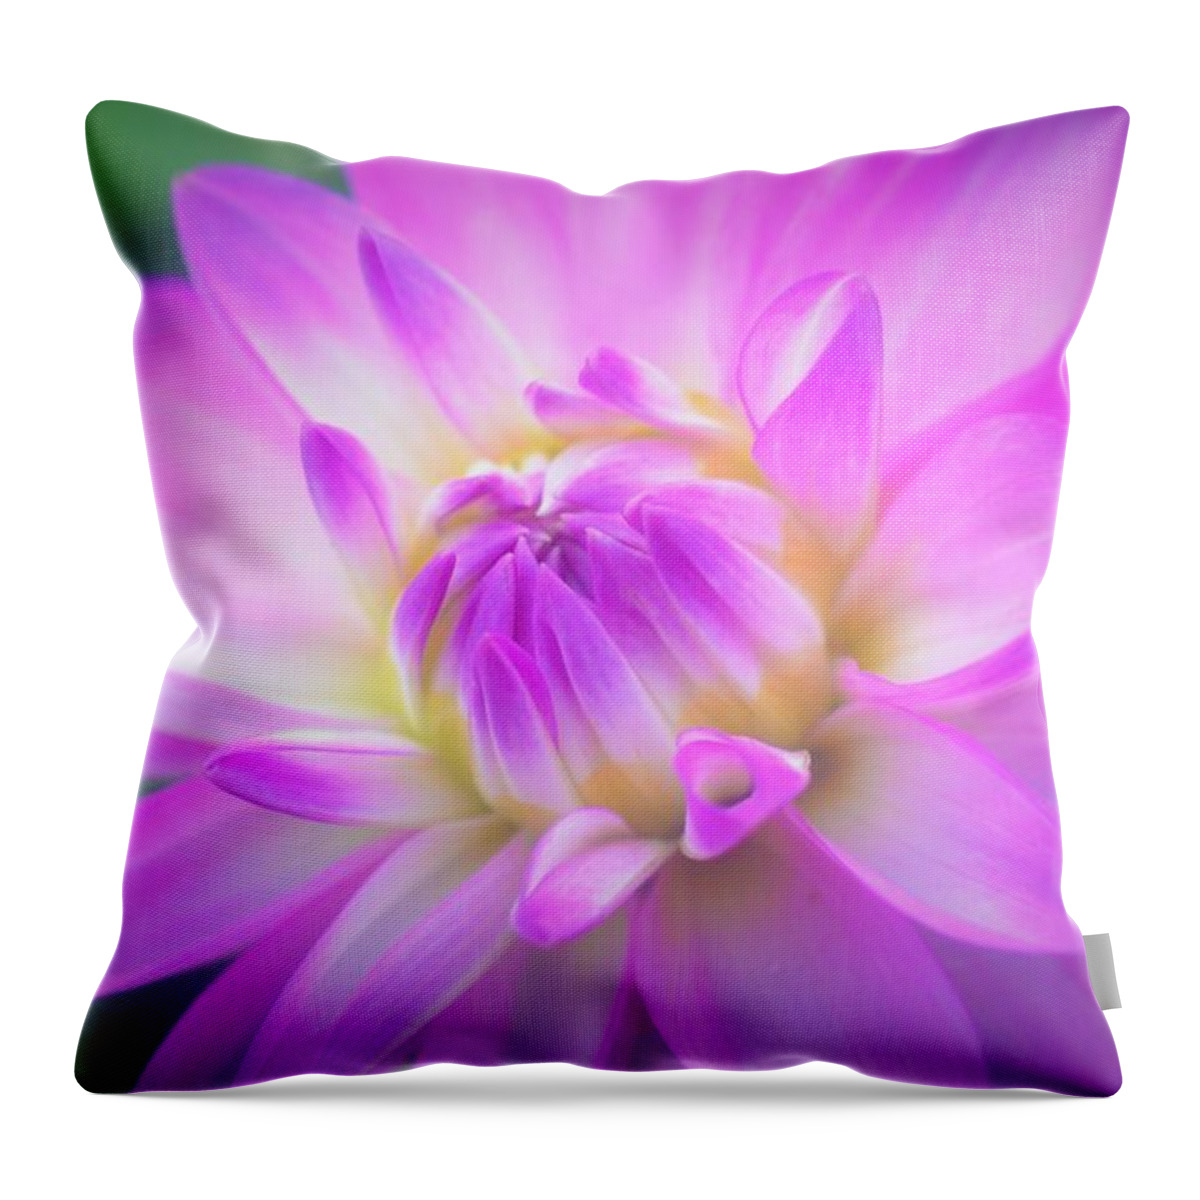 Purple Throw Pillow featuring the digital art Splendor by Danecha Osborne